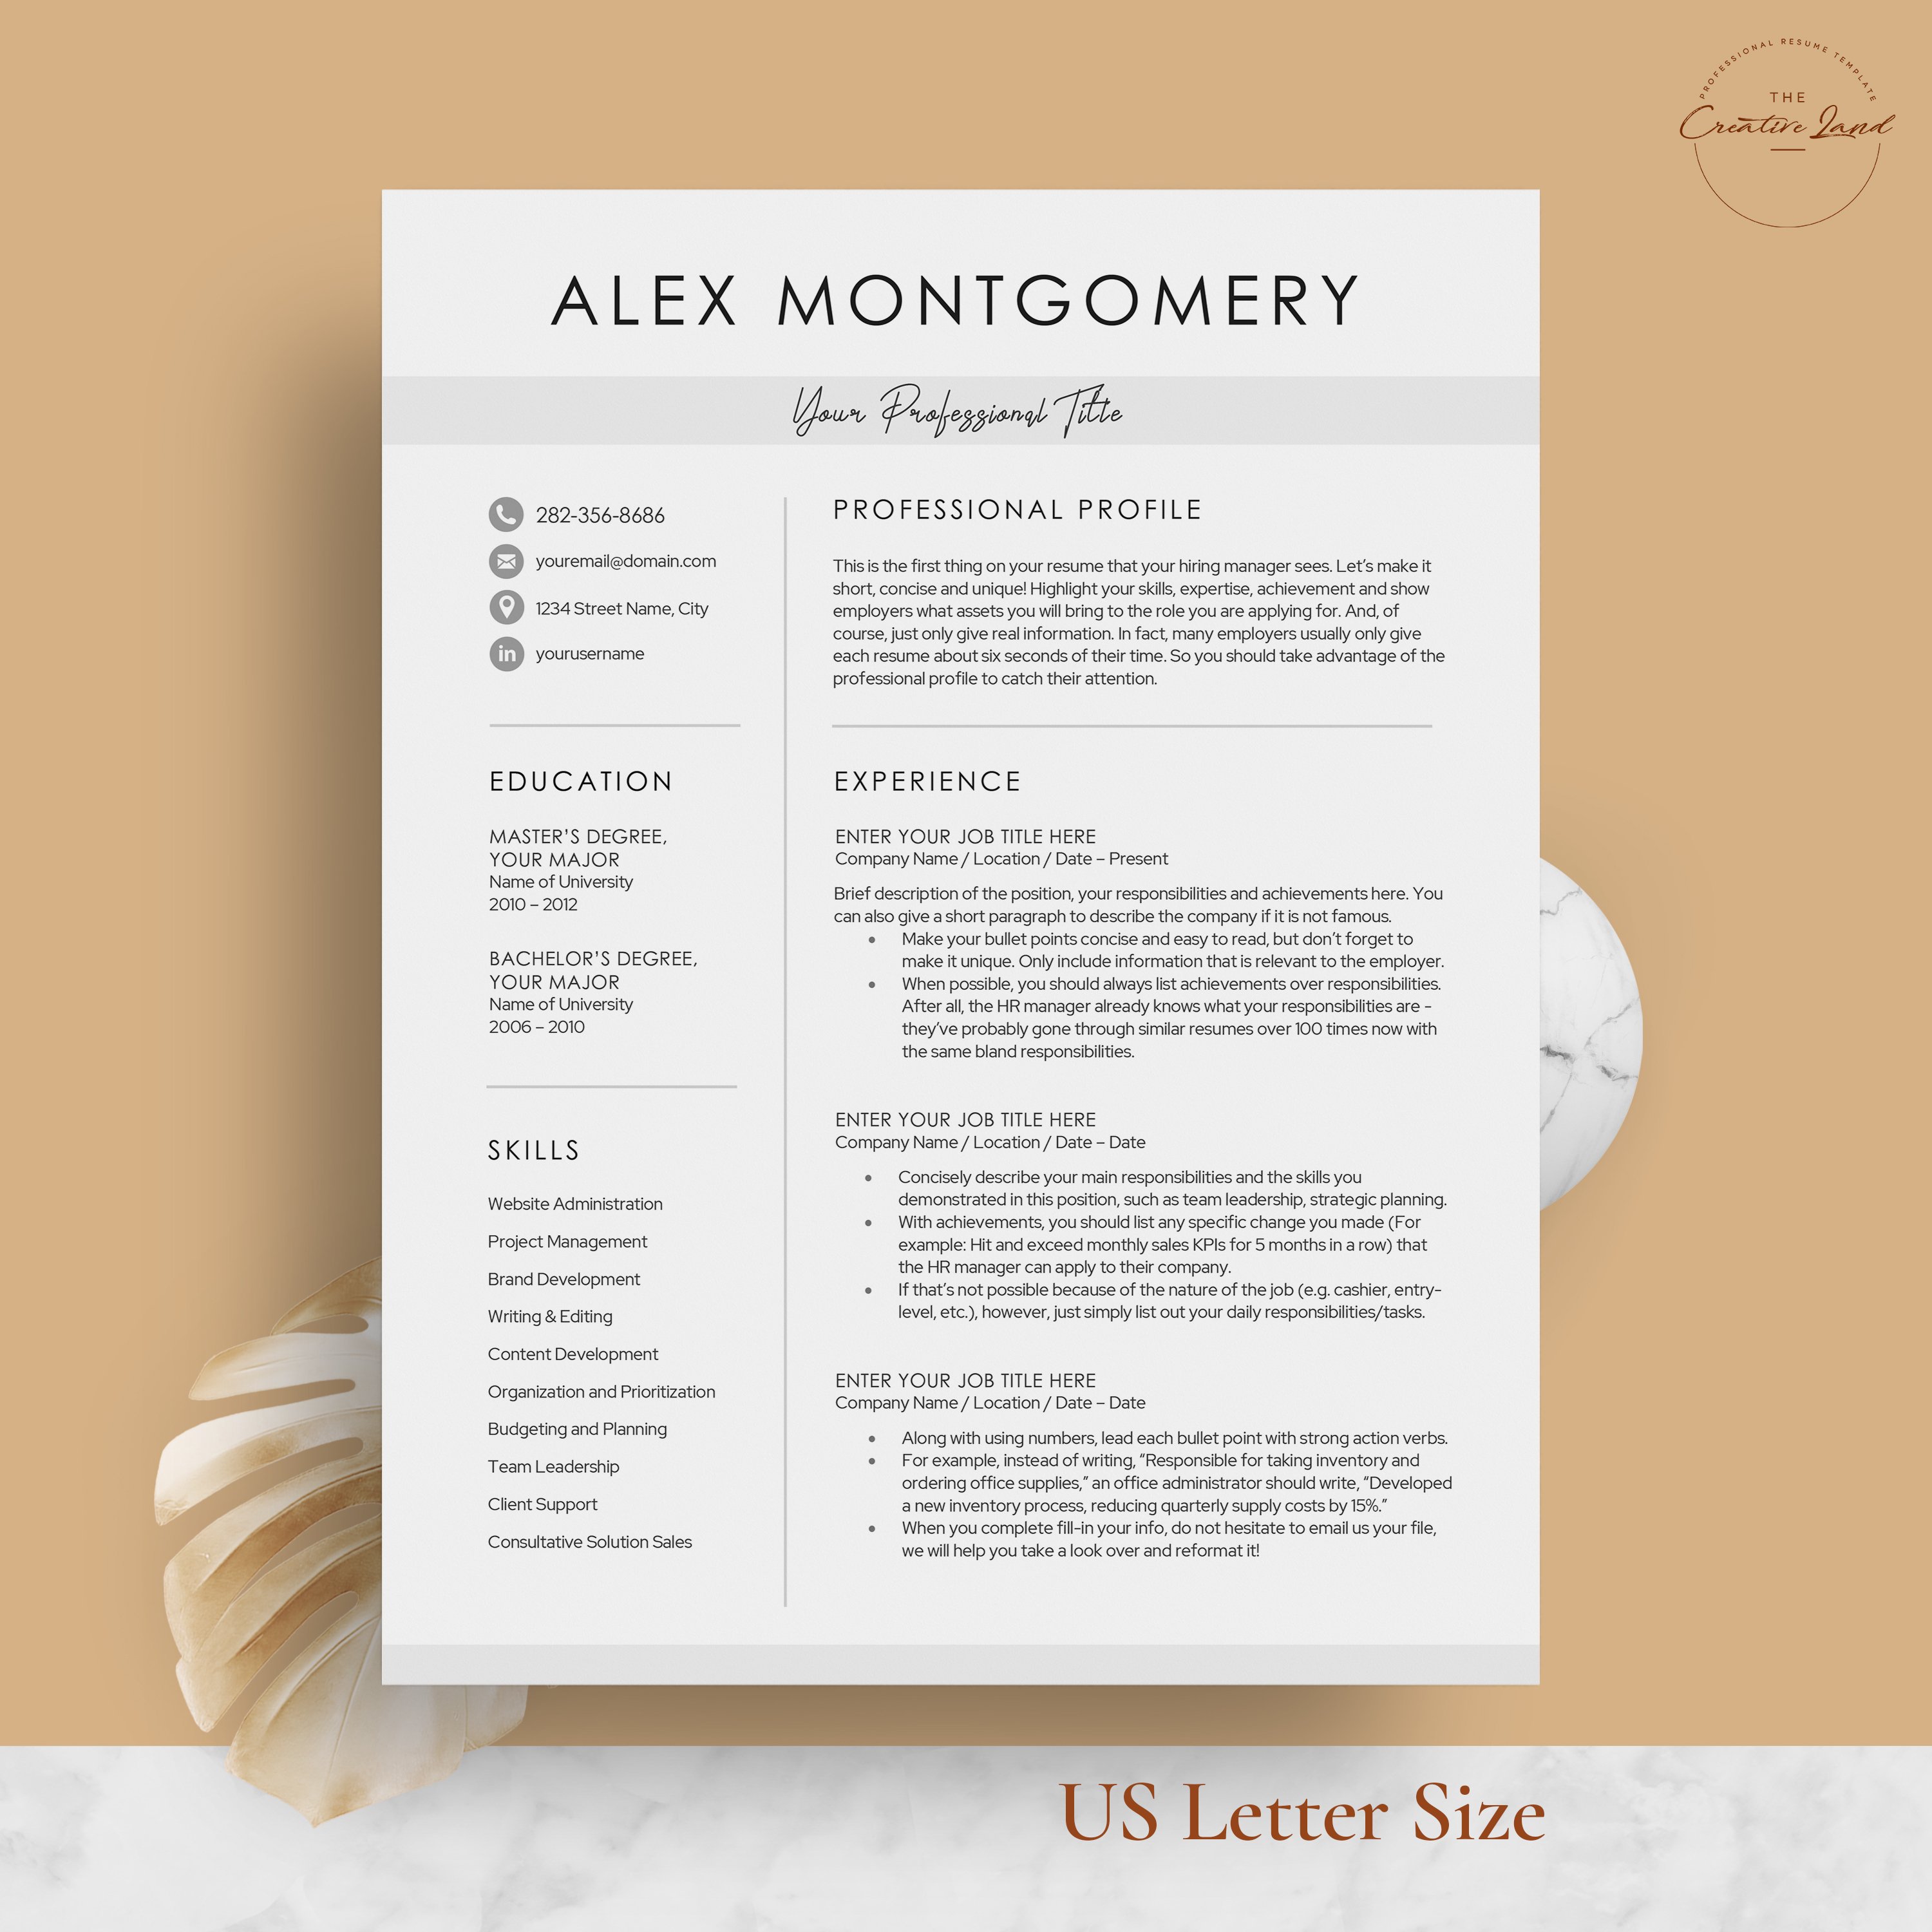 Resume/CV - The Alex preview image.